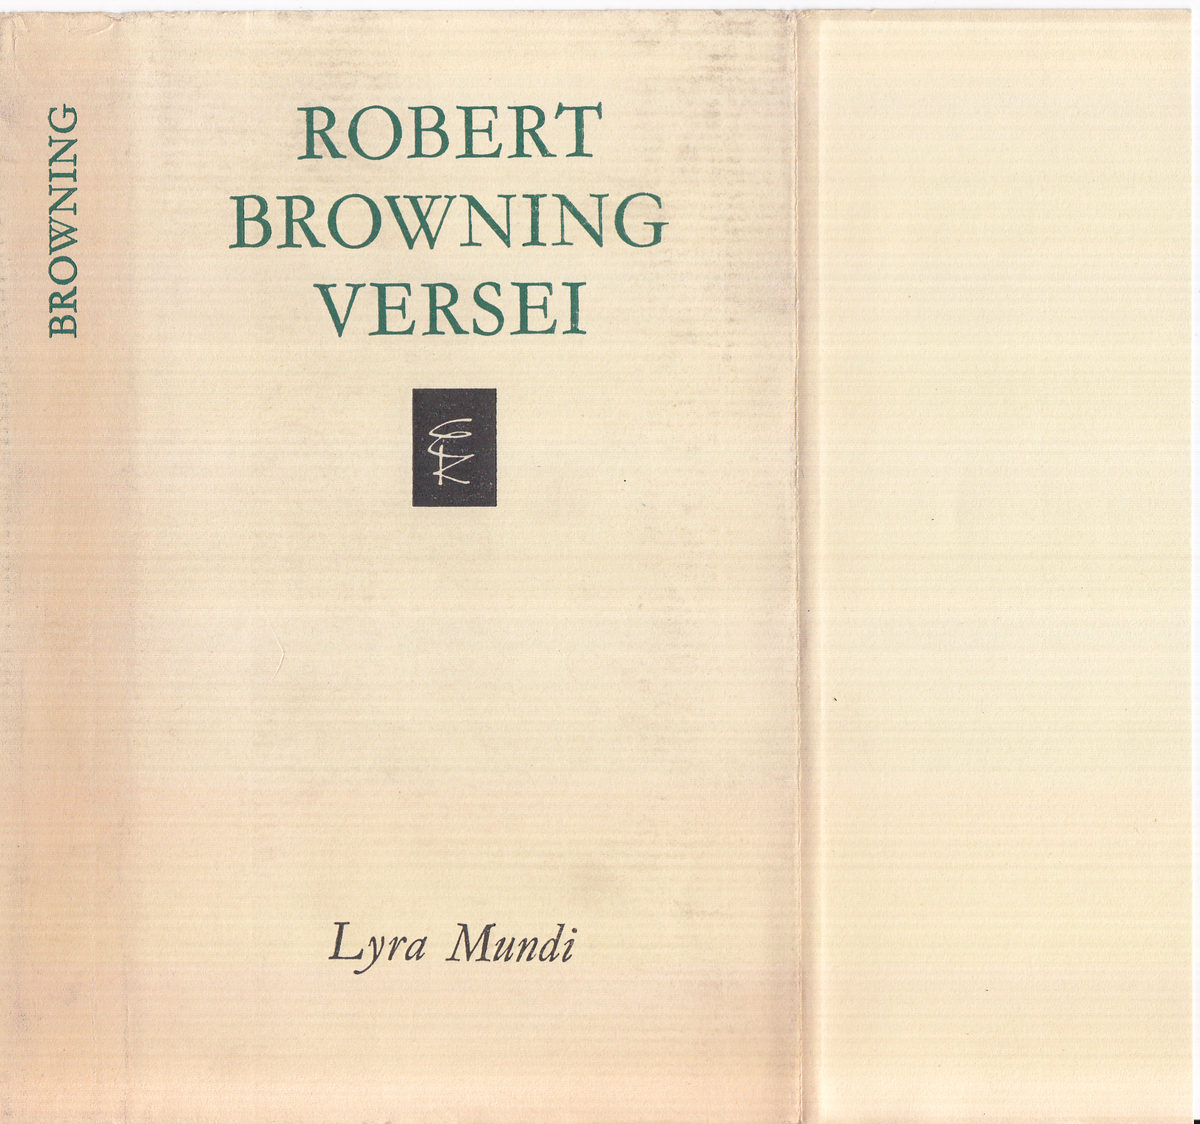 Browning, Robert: Robert Browning versei | Library OPAC